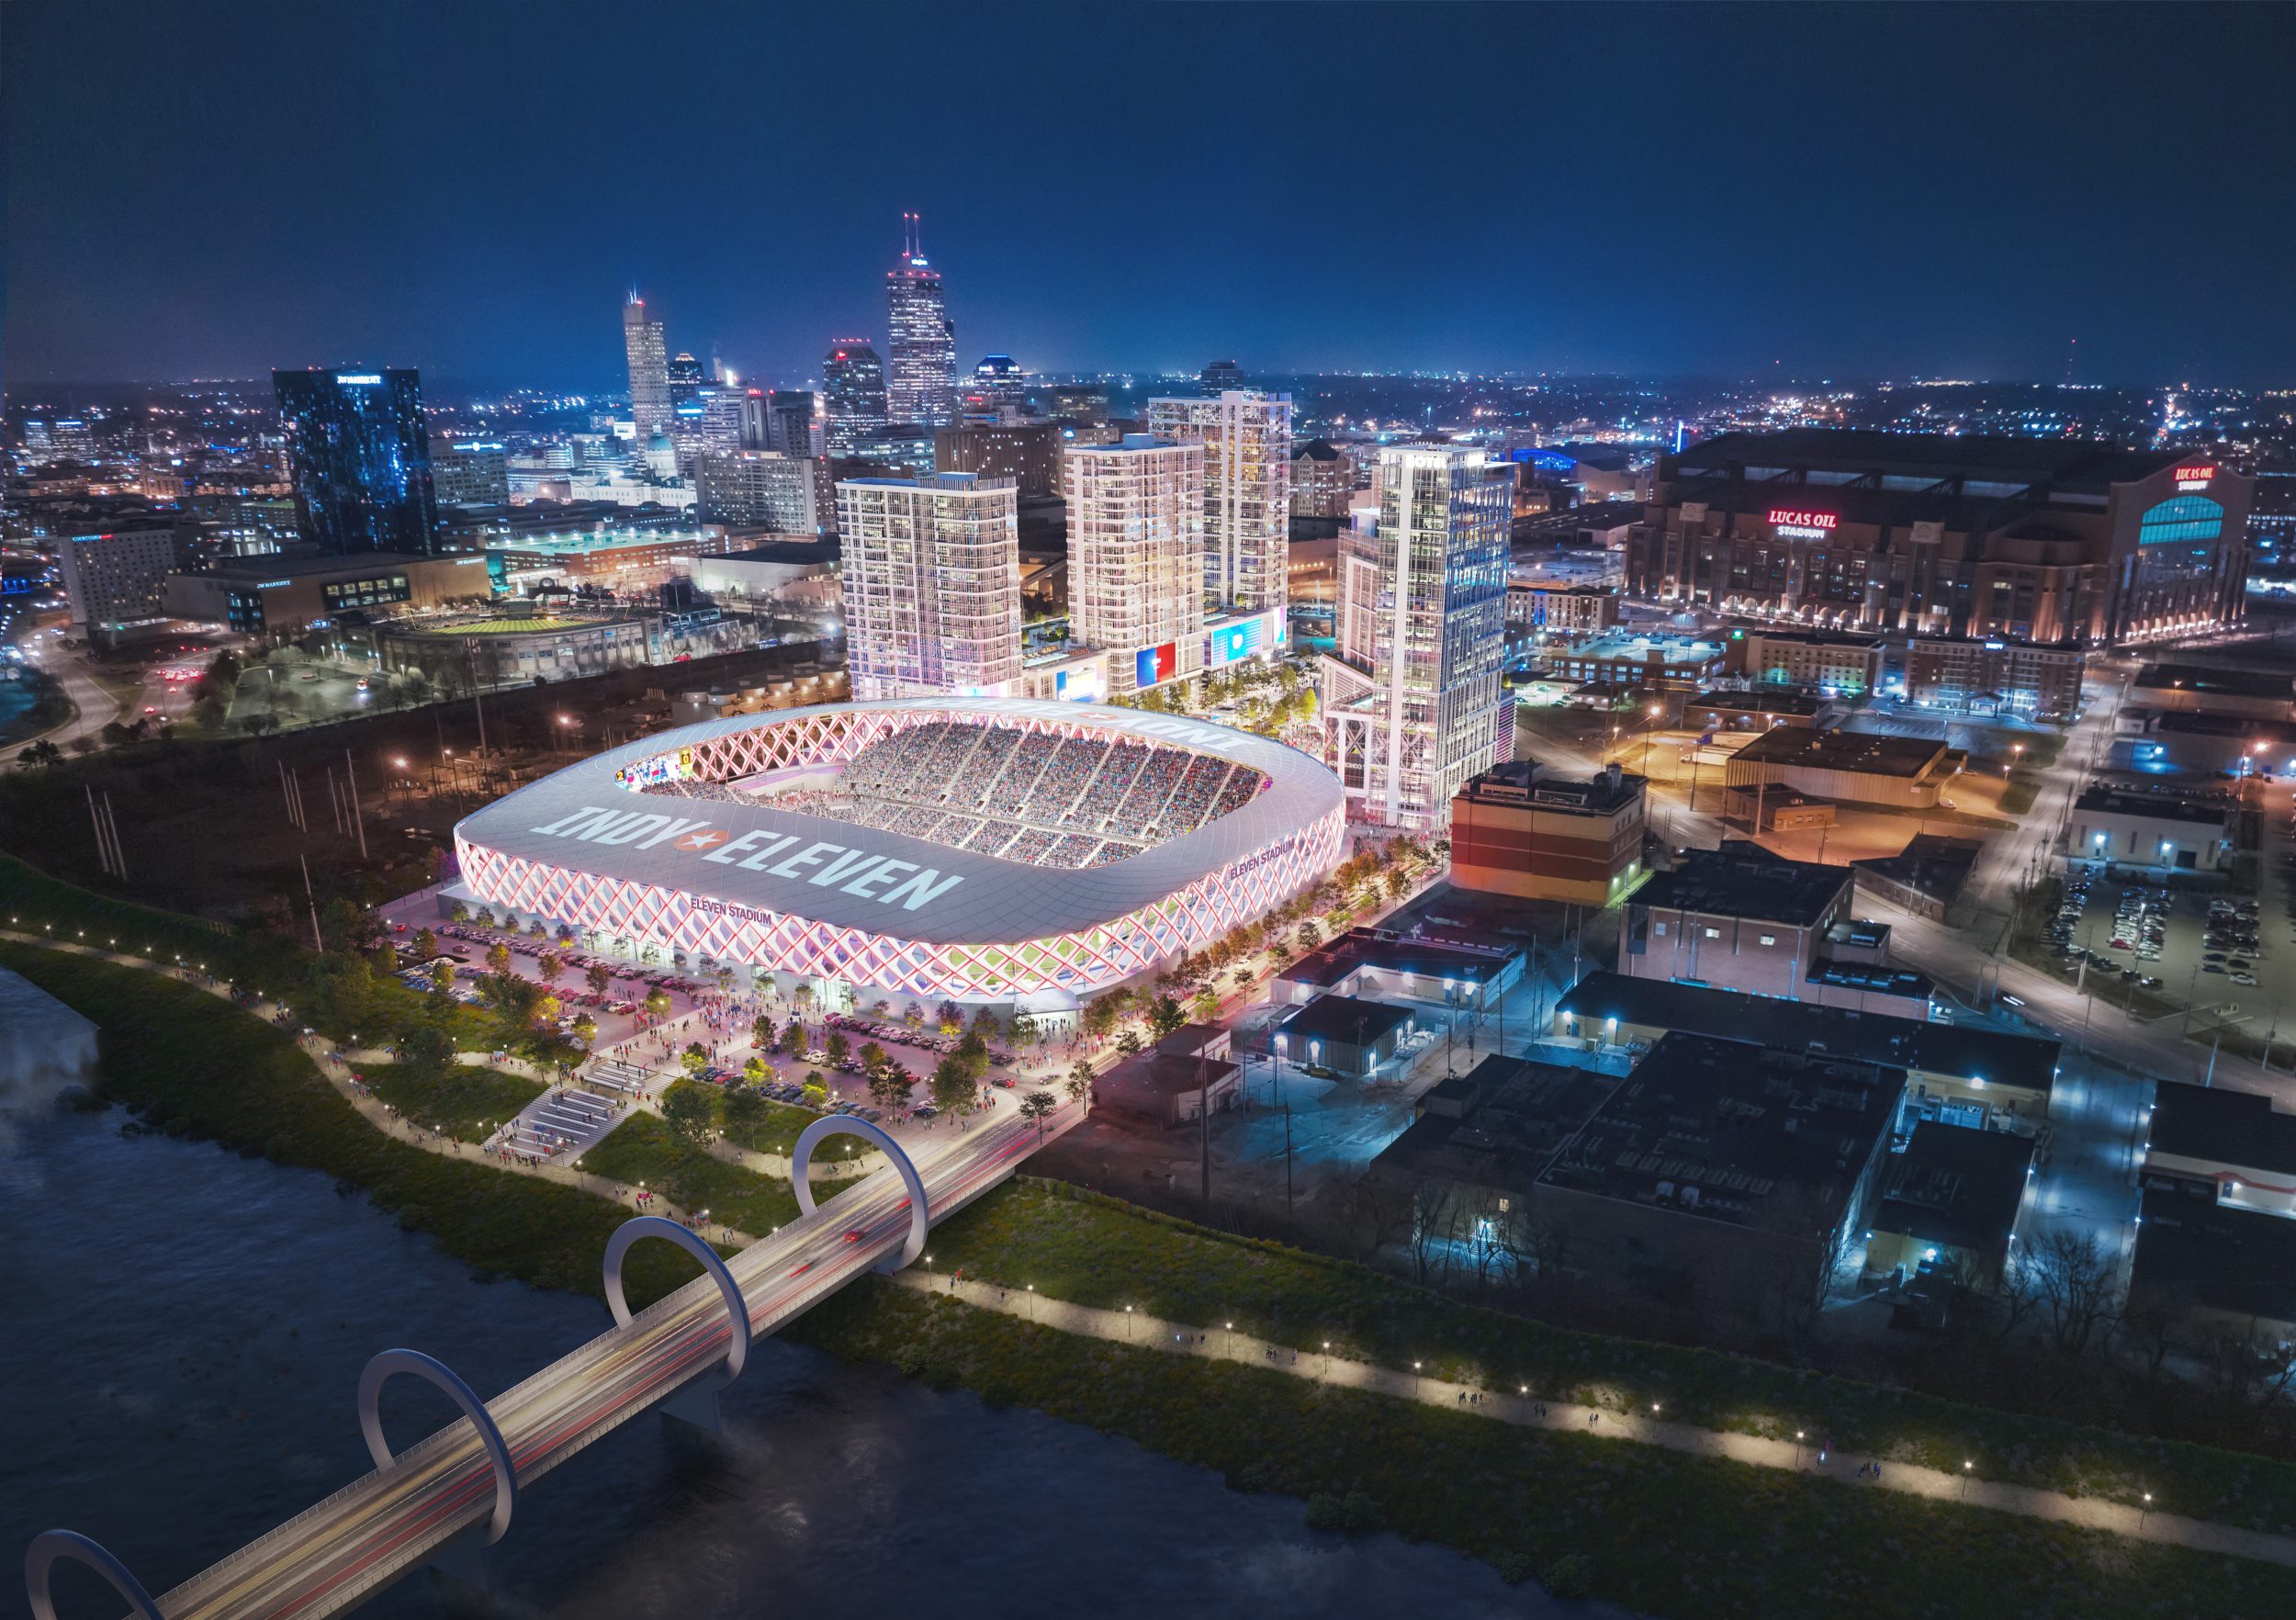 Look: Royals release renderings for potential new stadium